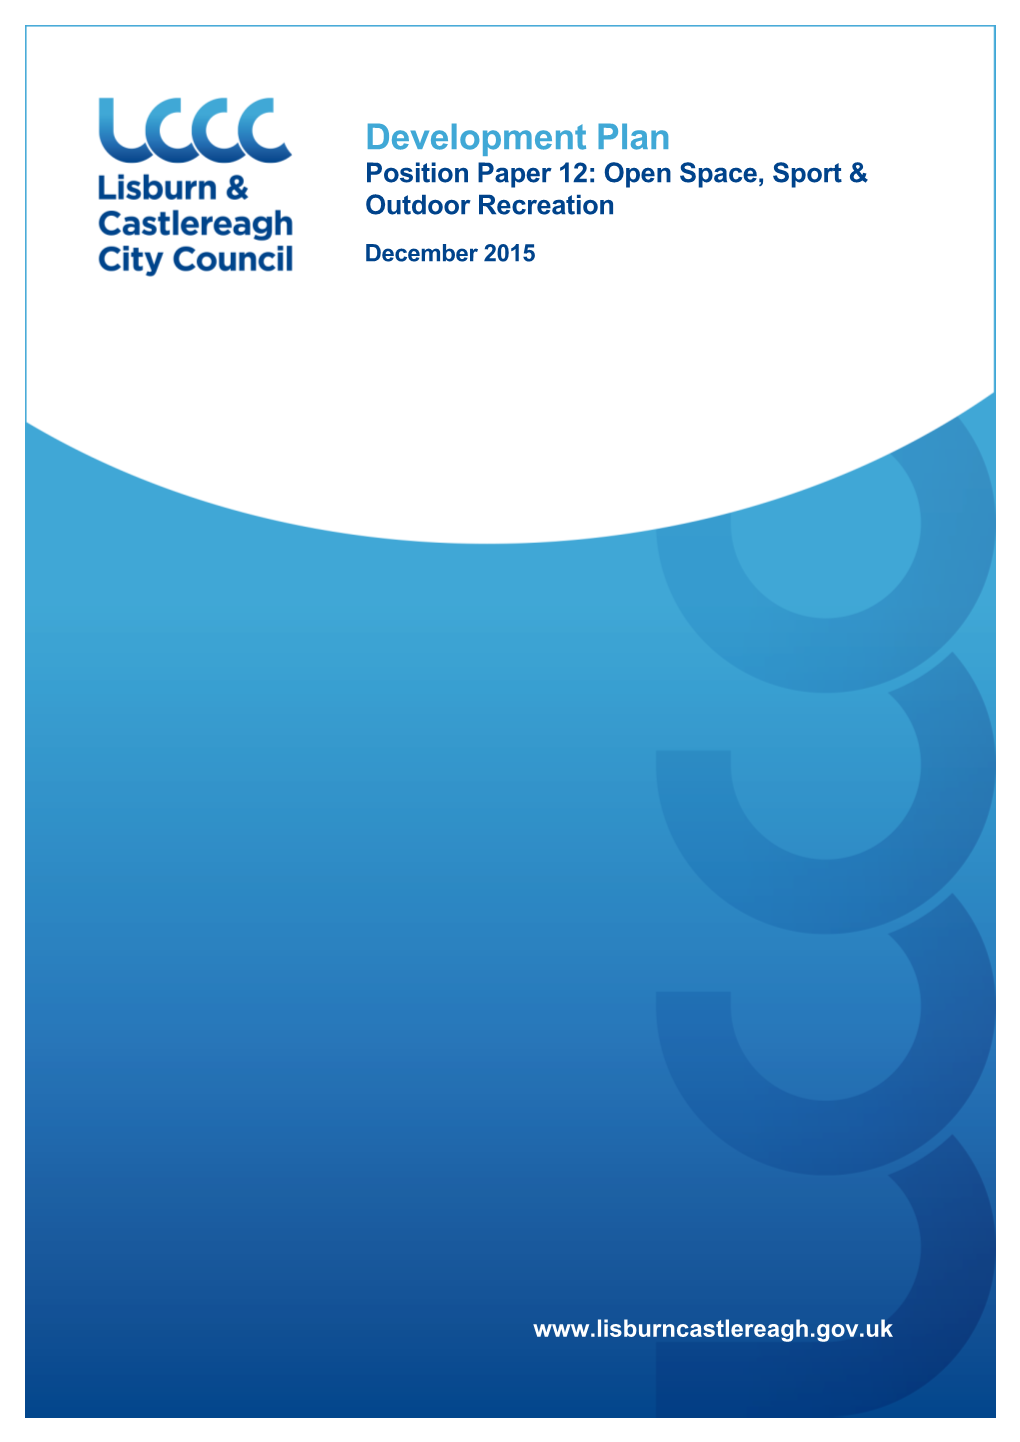 Development Plan Position Paper 12: Open Space, Sport & Outdoor Recreation December 2015